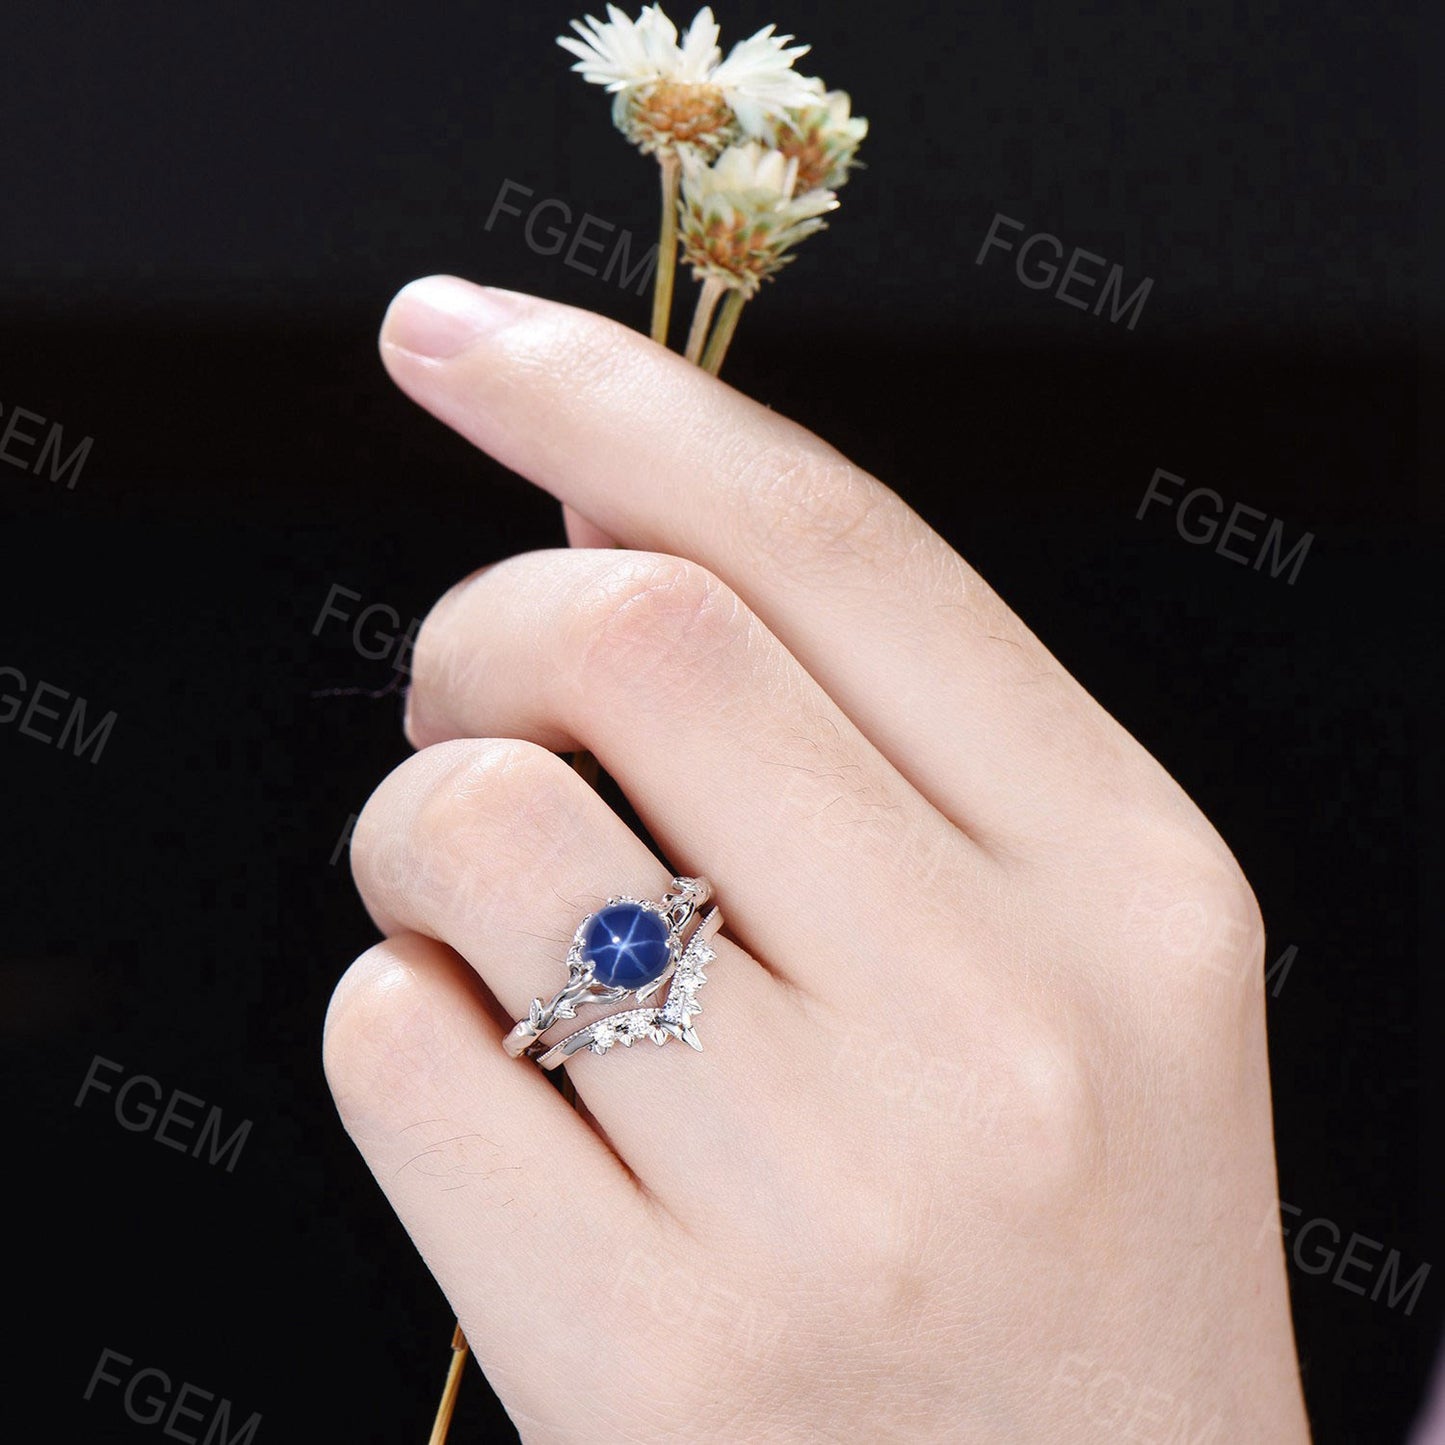 6.5mm Round Blue Star Sapphire Engagement Ring Set Branch Leaf Moissanite Milgrain Wedding Ring Blue Gemstone Solitaire Ring Gift for Women